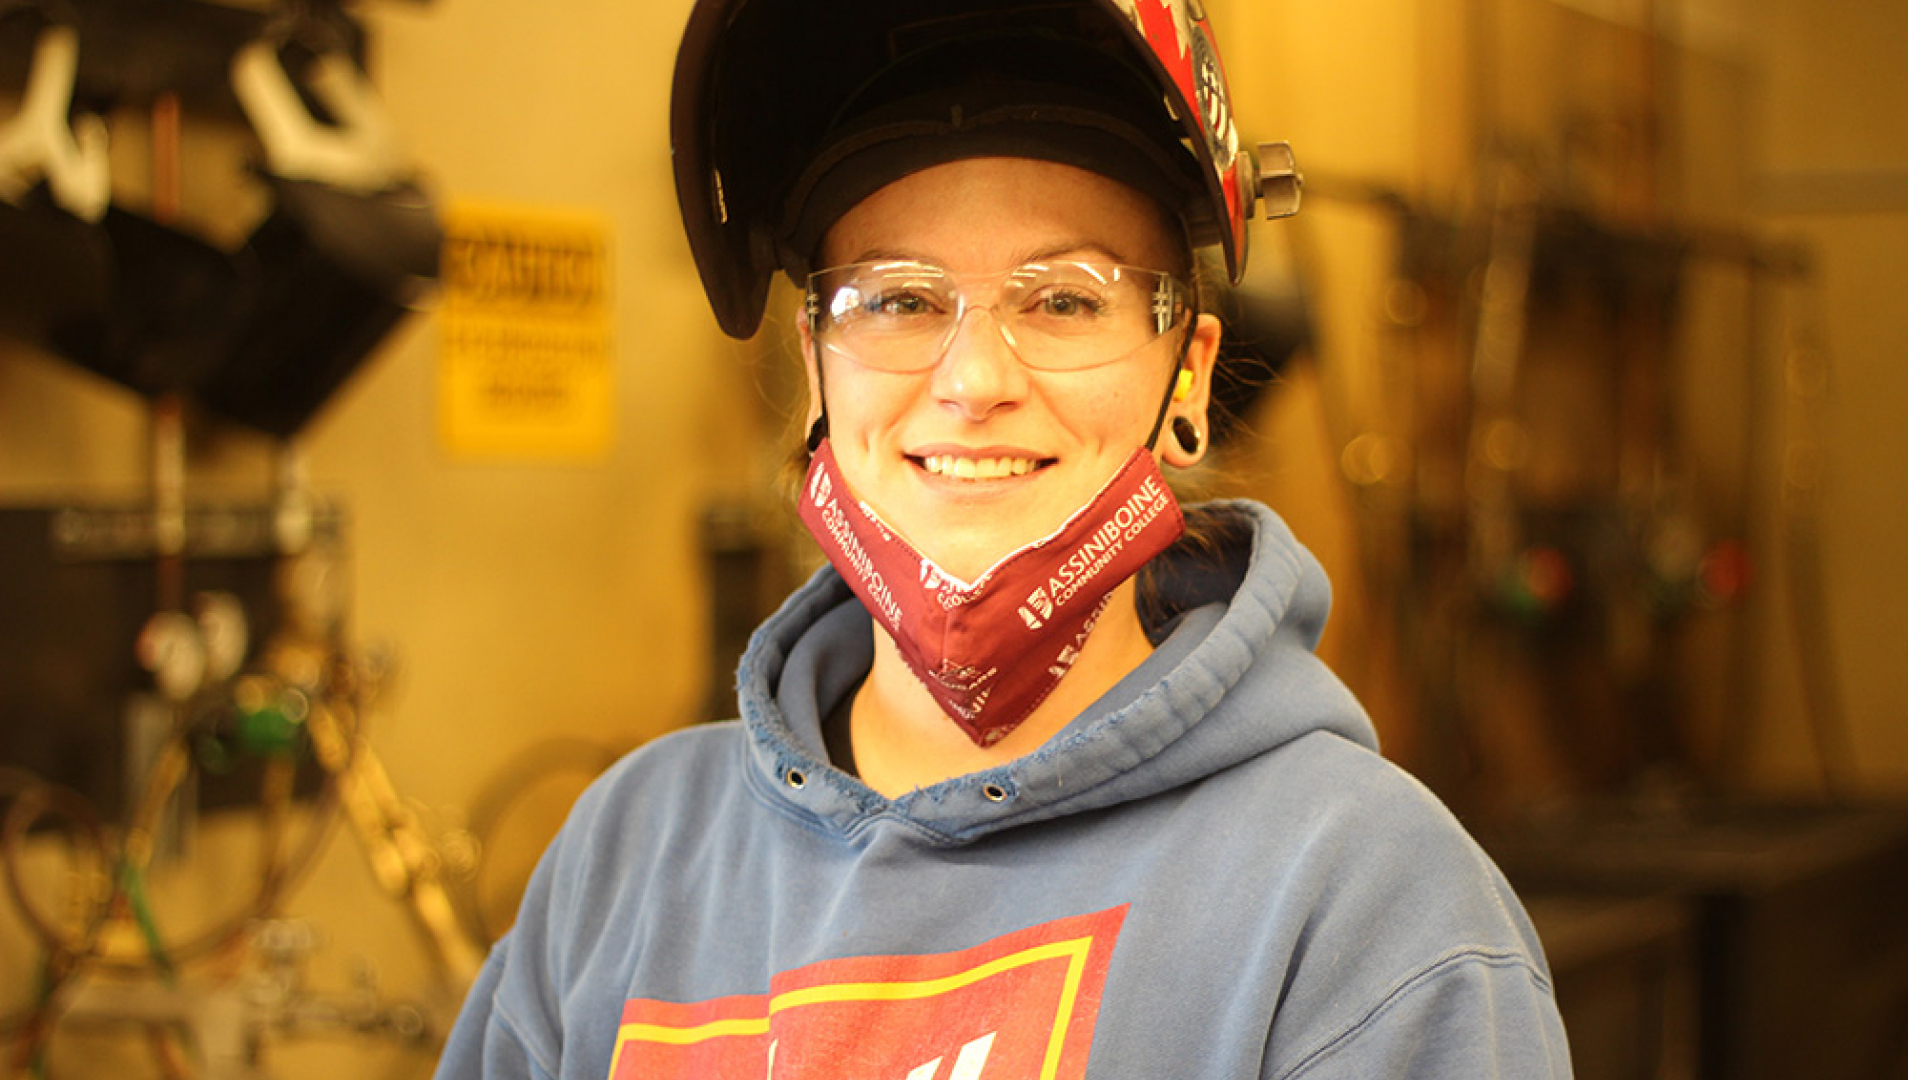 Heather Bruederlin profile photo in welding shop.